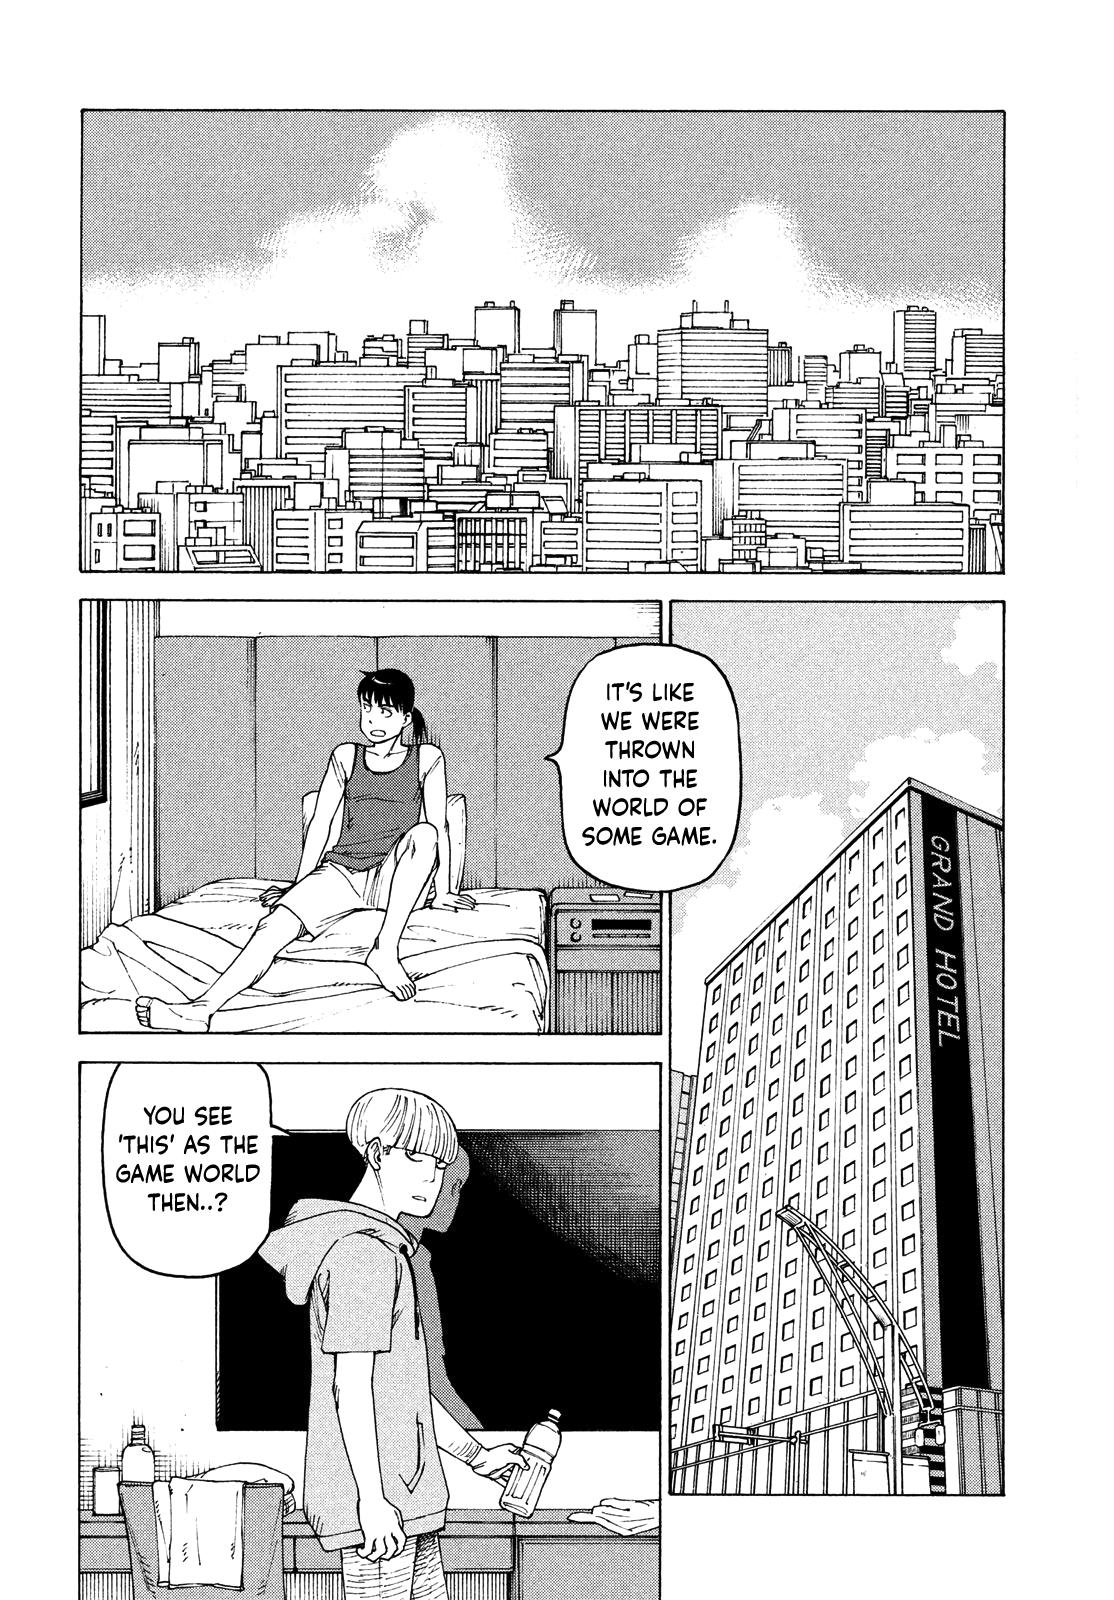 USED) Manga Tengoku Daimakyou vol.8 (天国大魔境(8)) / Ishiguro